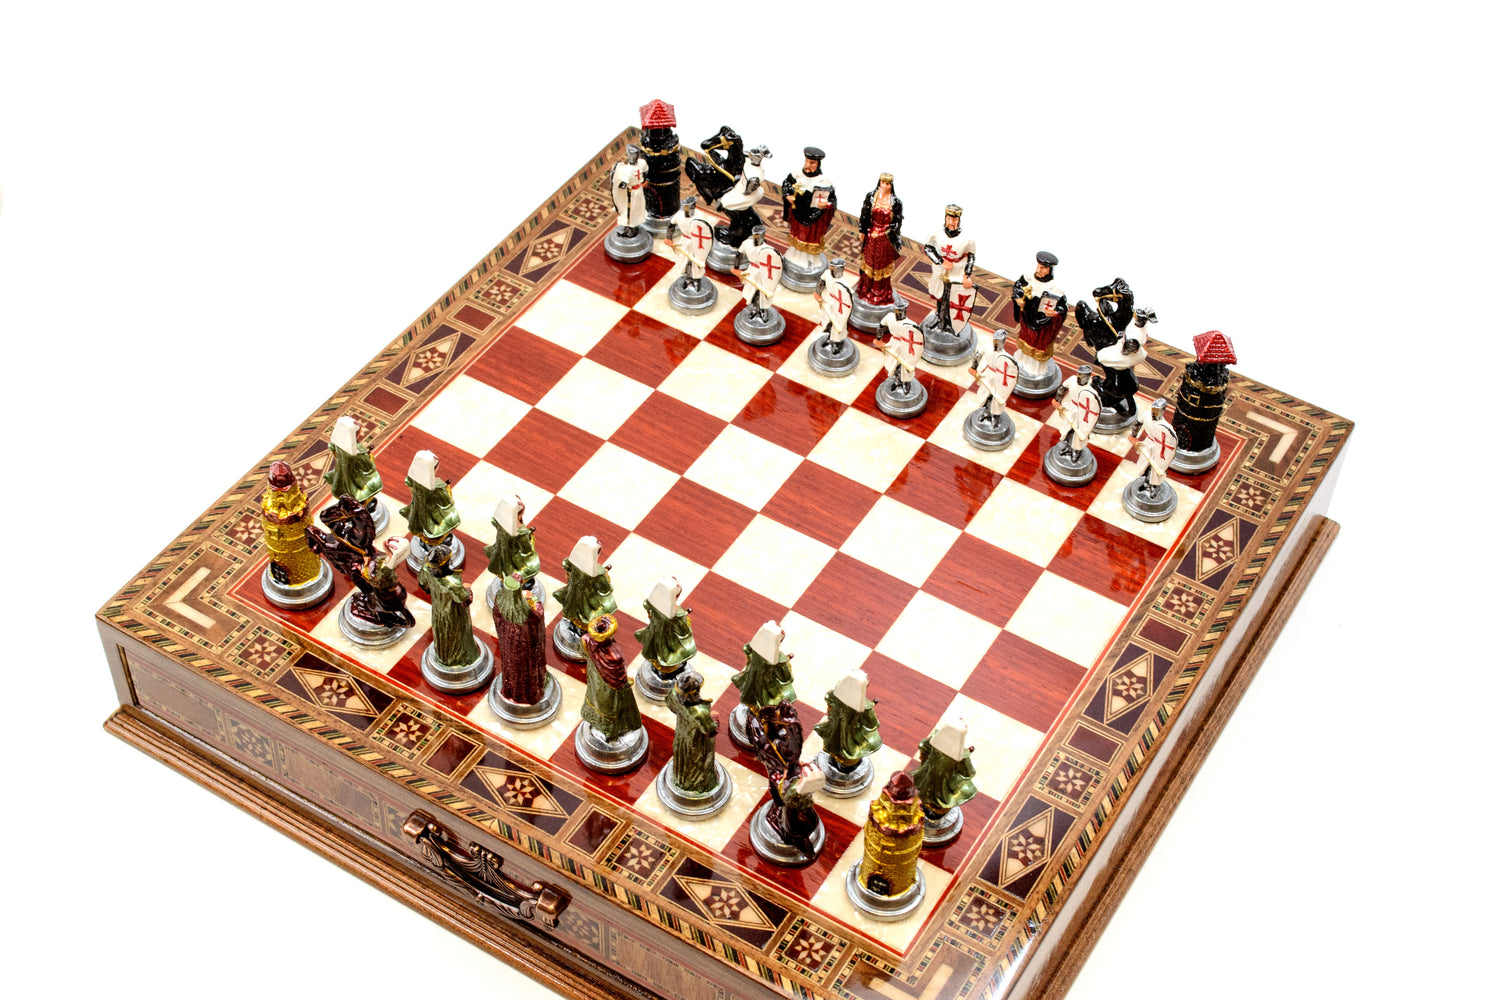 Handmade Chess Set - Ottoman Crusaders: Wood with Drawer - Ketohandcraft